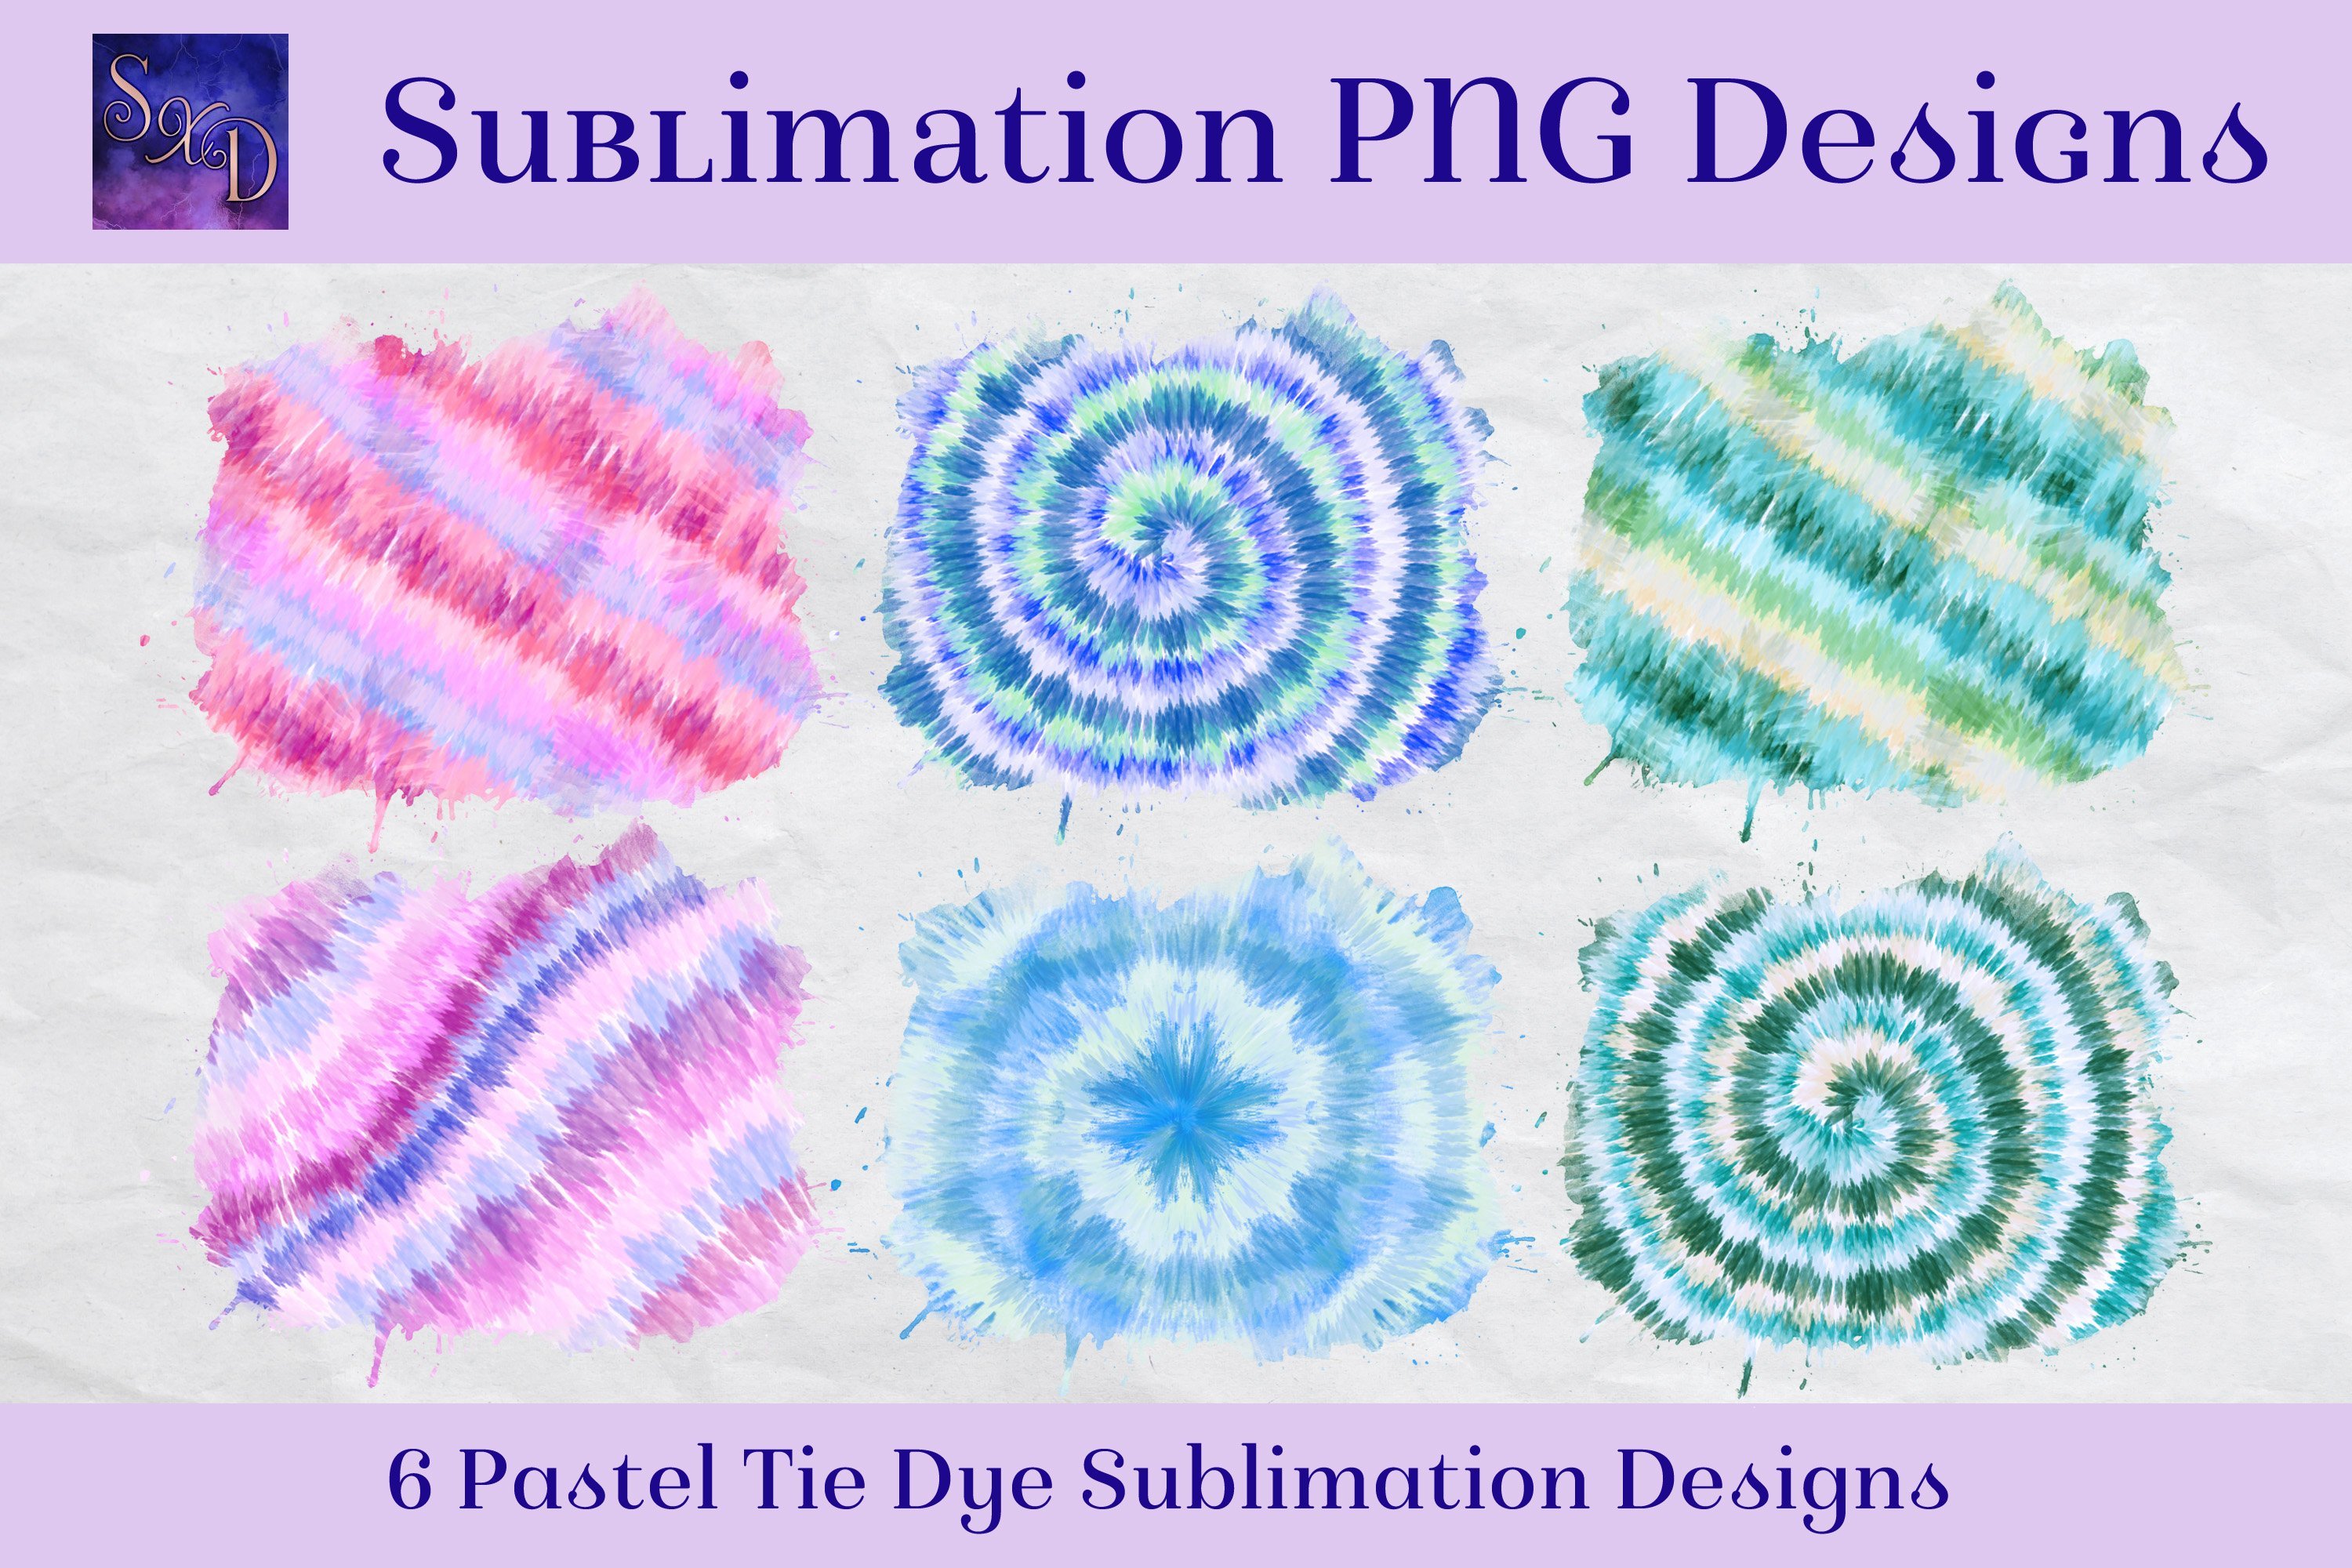 Sublimation - Pastel Tie Dye cover image.